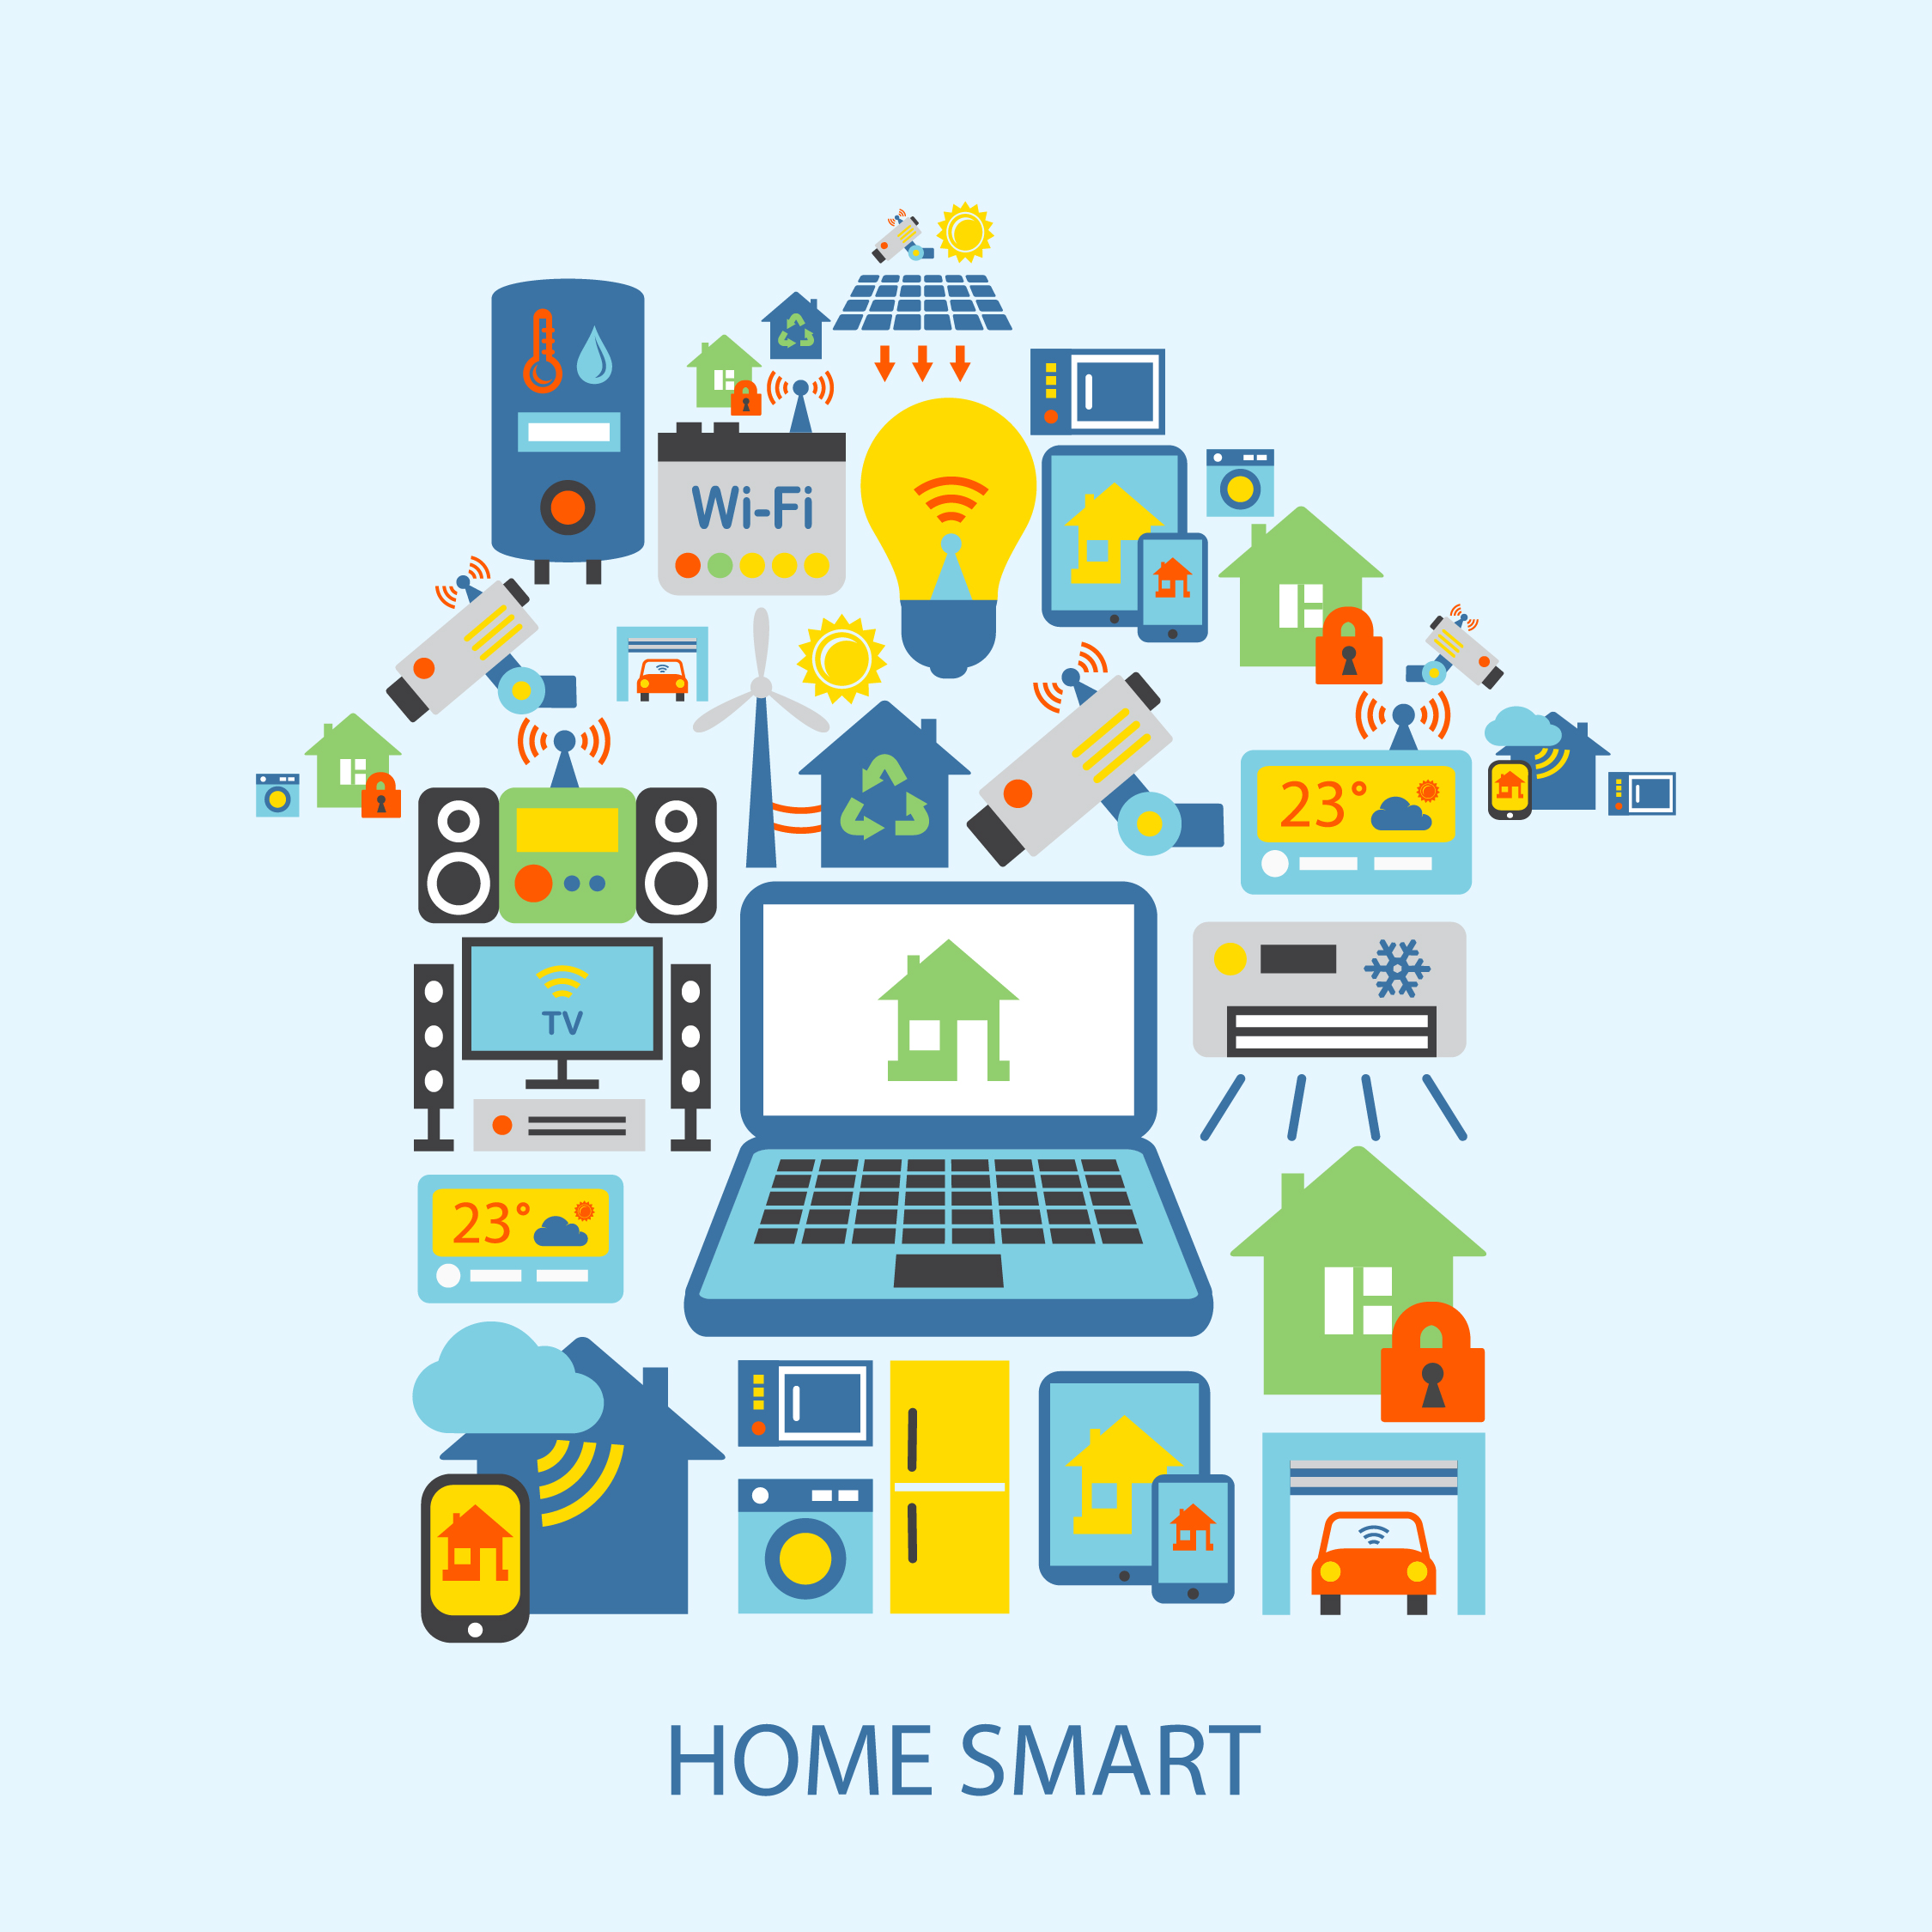 Download Smart home icons set 438891 - Download Free Vectors ...